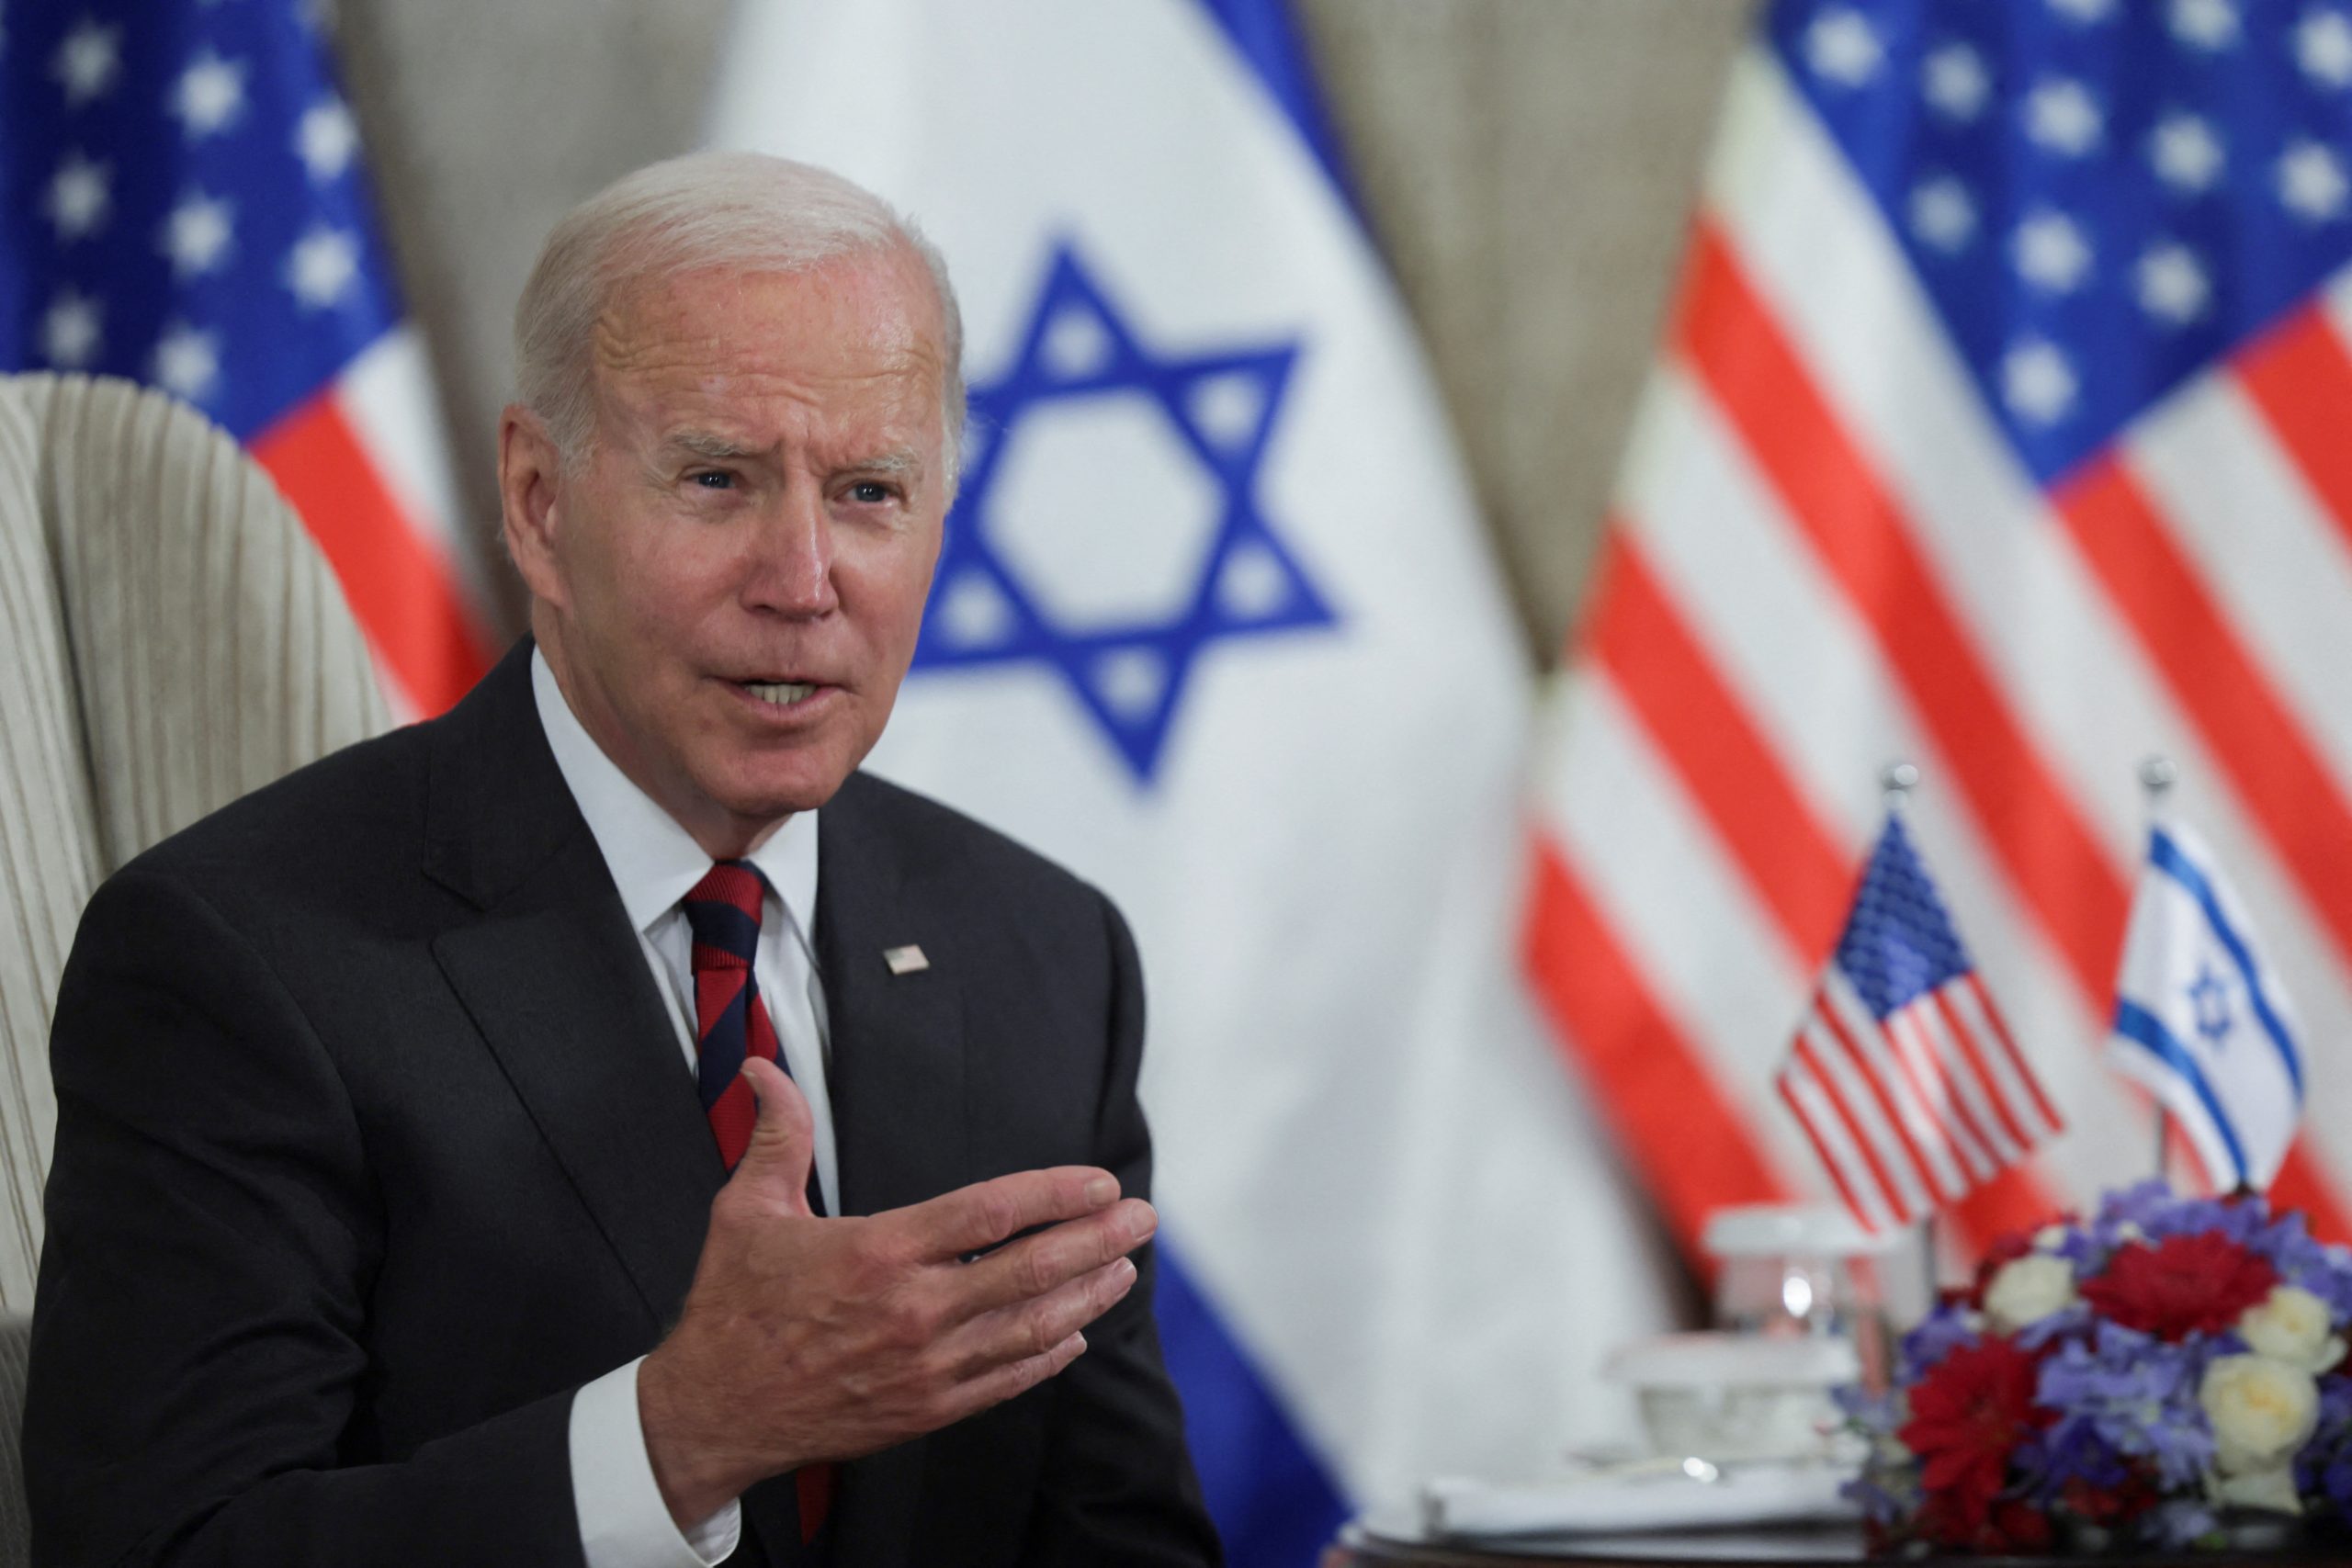 Catholic groups urge Biden to seek diplomacy with Putin, avoid nuclear war